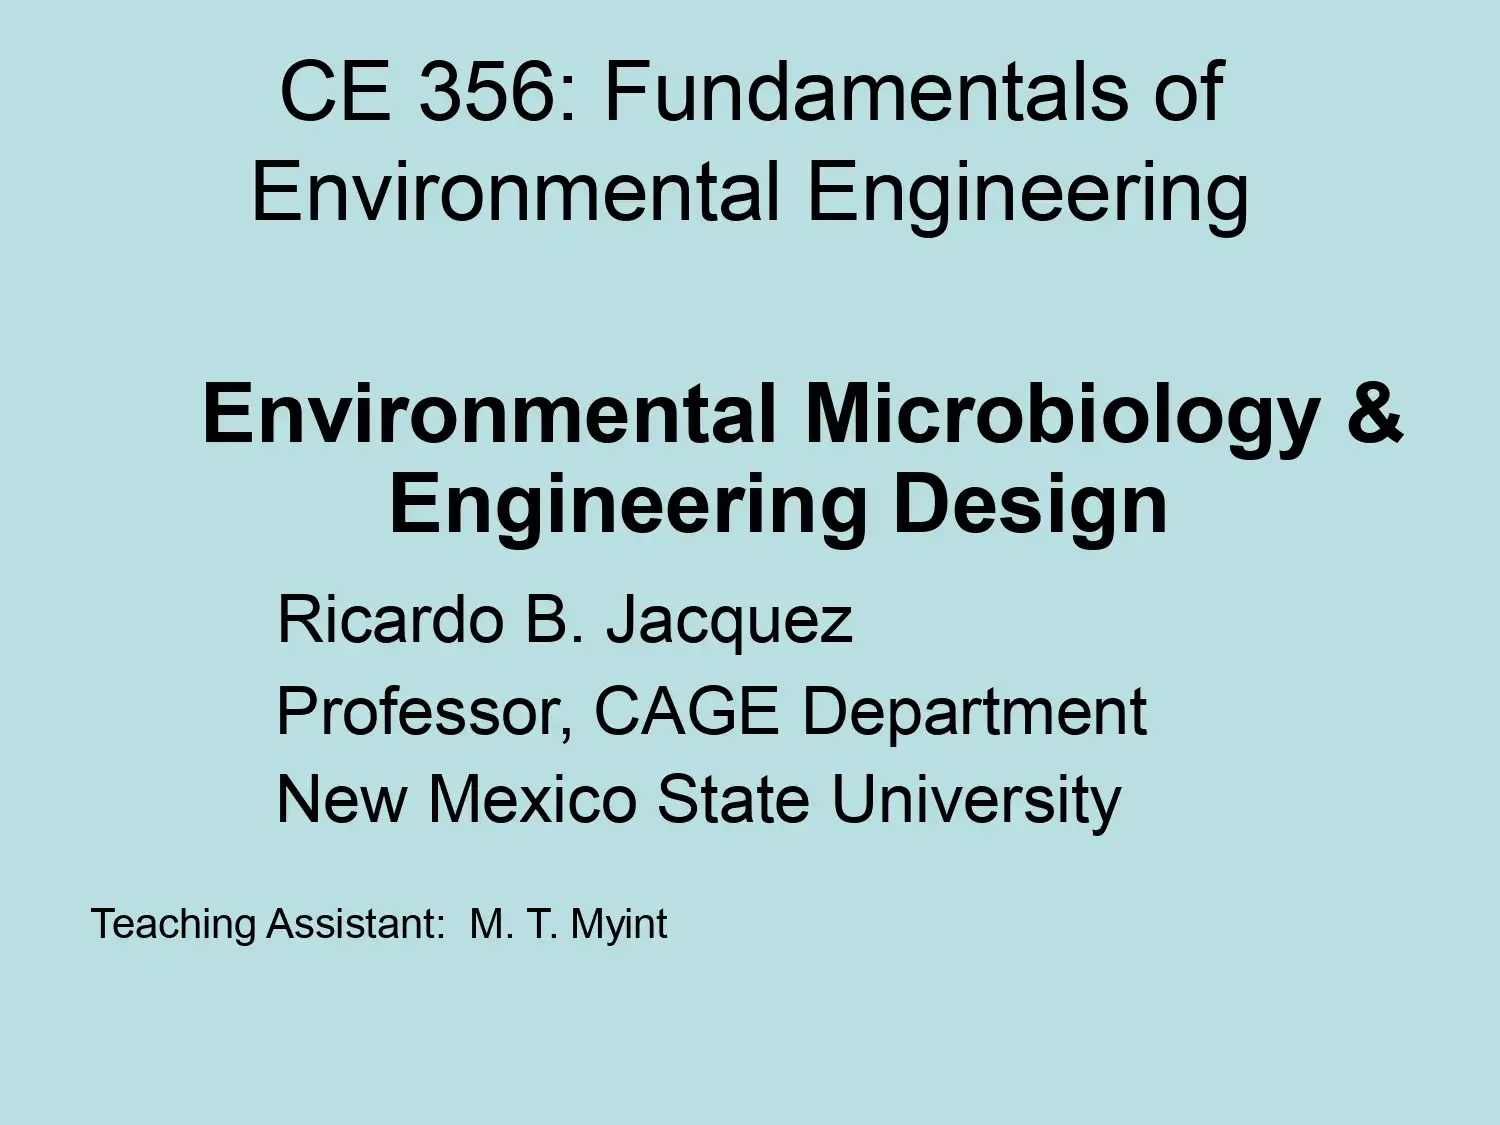 CE 356: Fundamentals of Environmental Engineering ( Environmental Microbiology & Engineering Design )